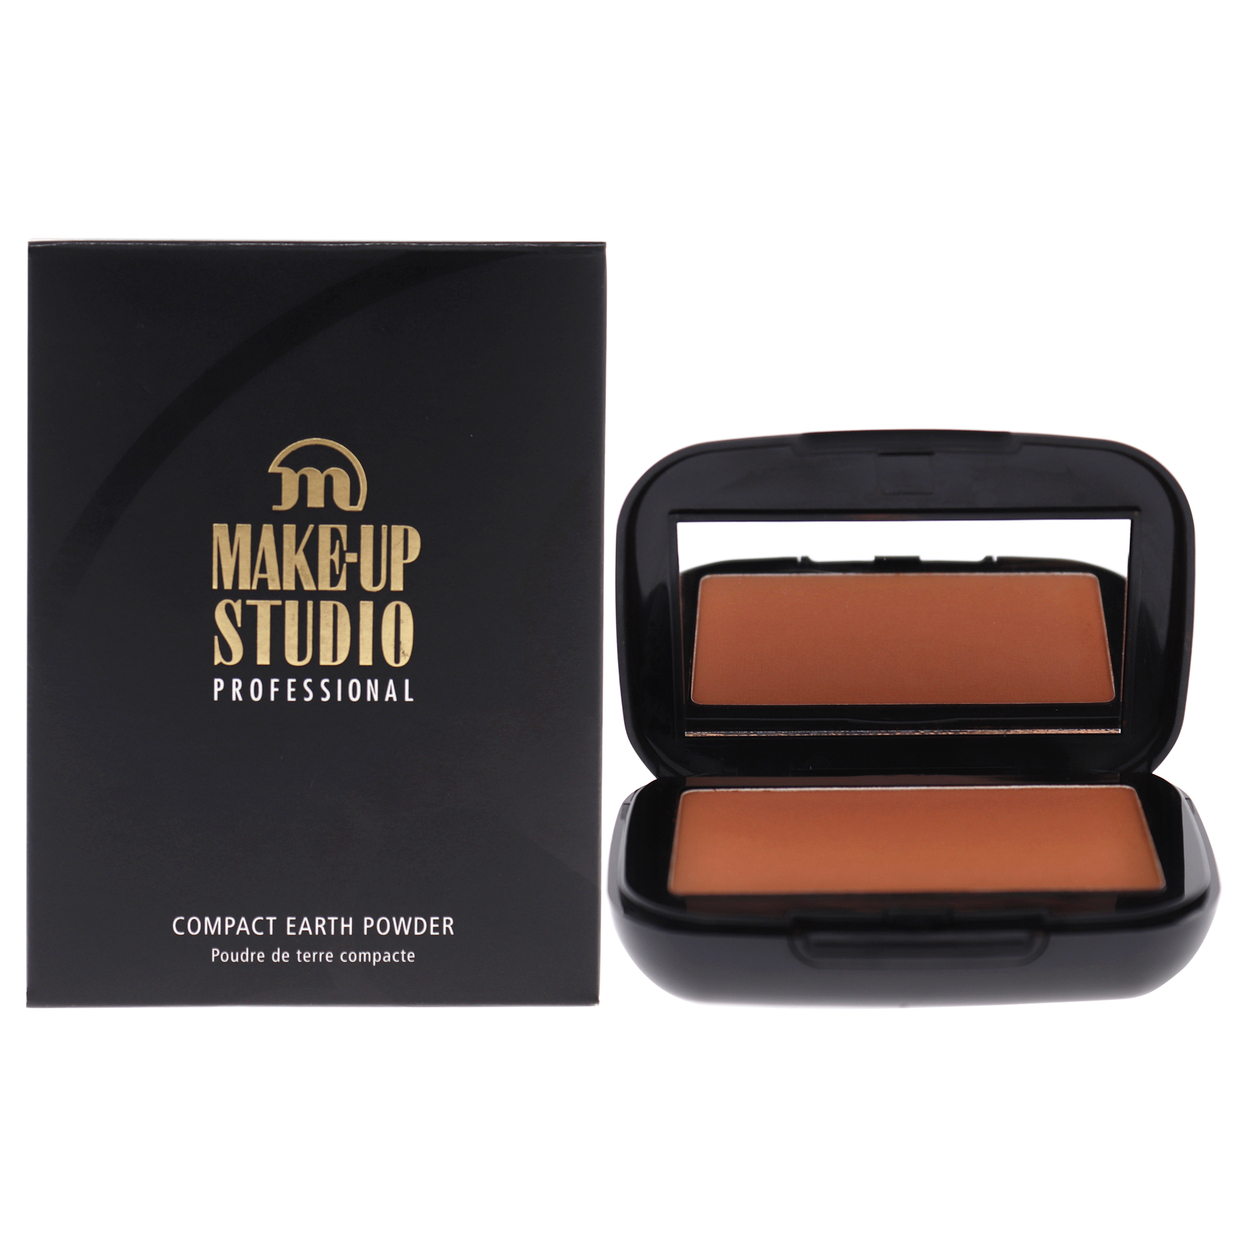 Make-Up Studio Compact Earth Powder - M5 0.39 Oz